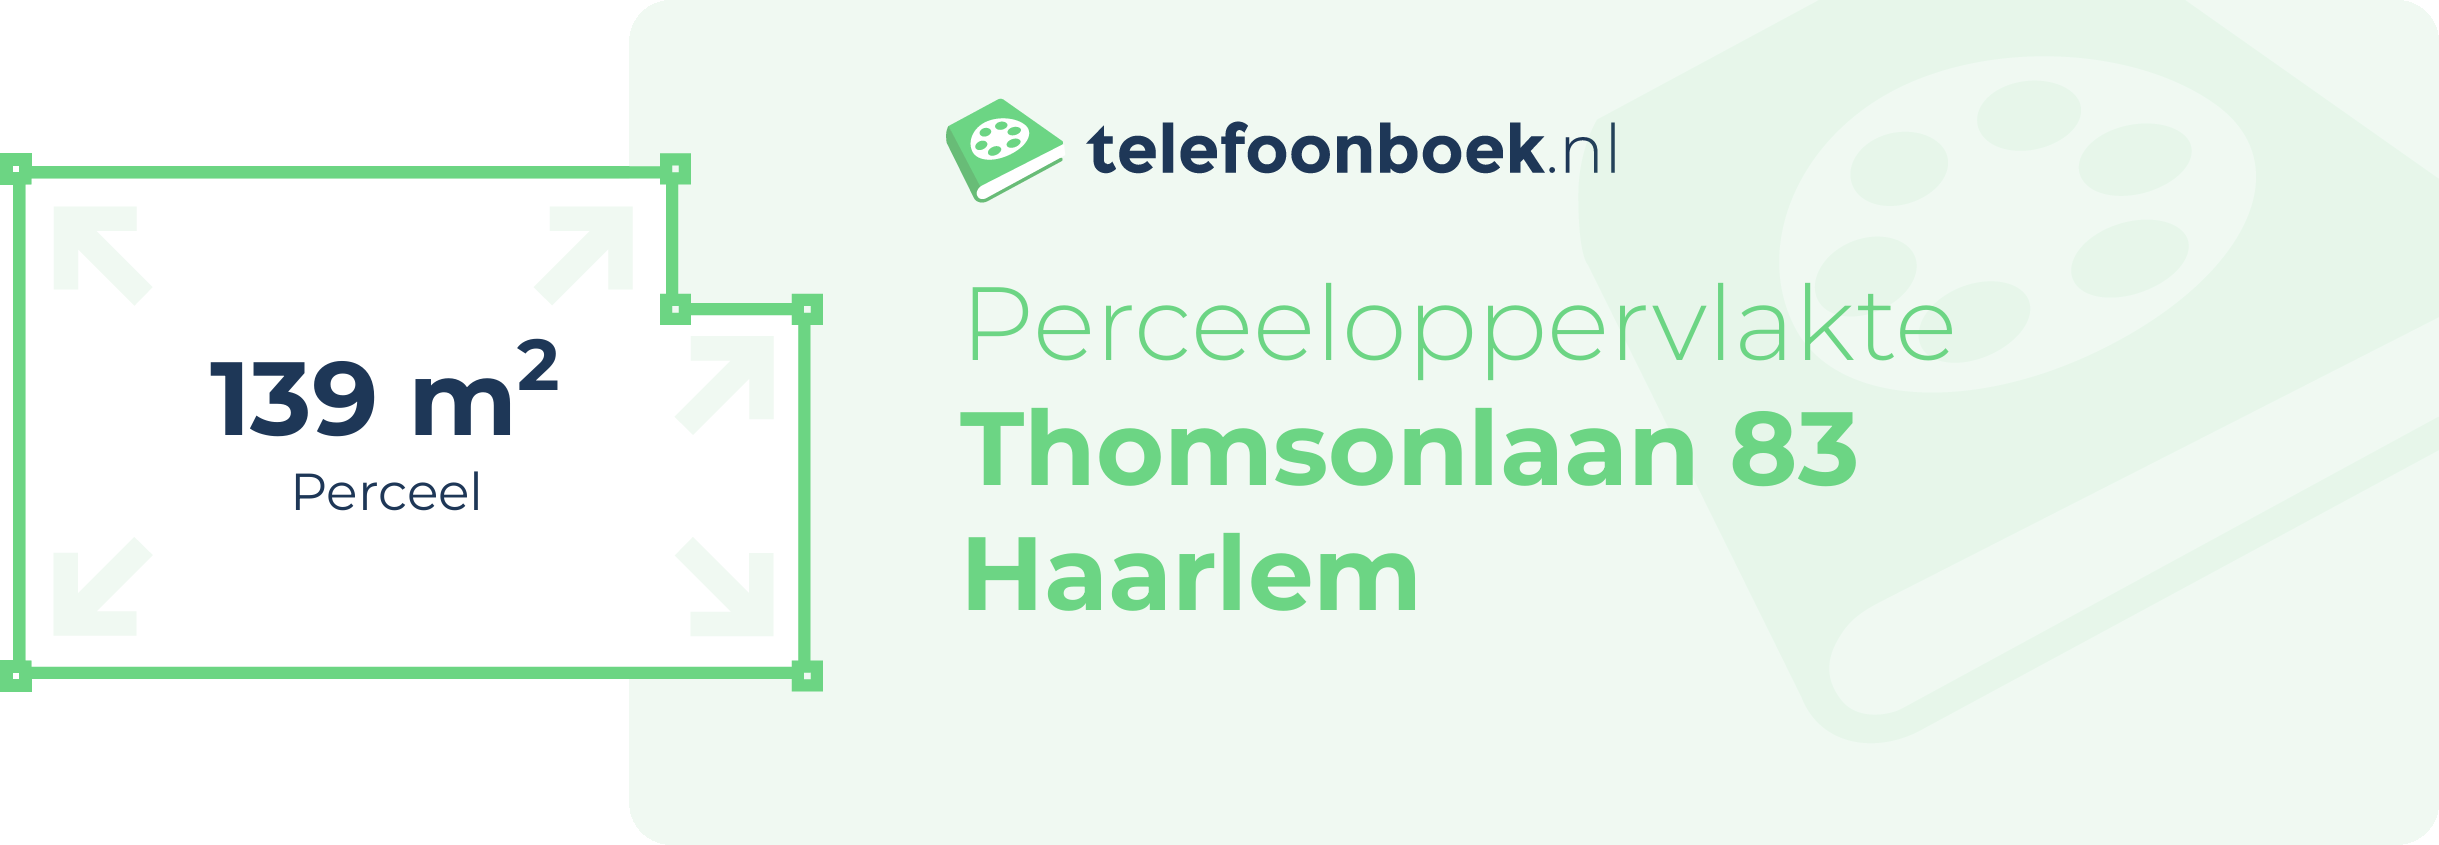 Perceeloppervlakte Thomsonlaan 83 Haarlem